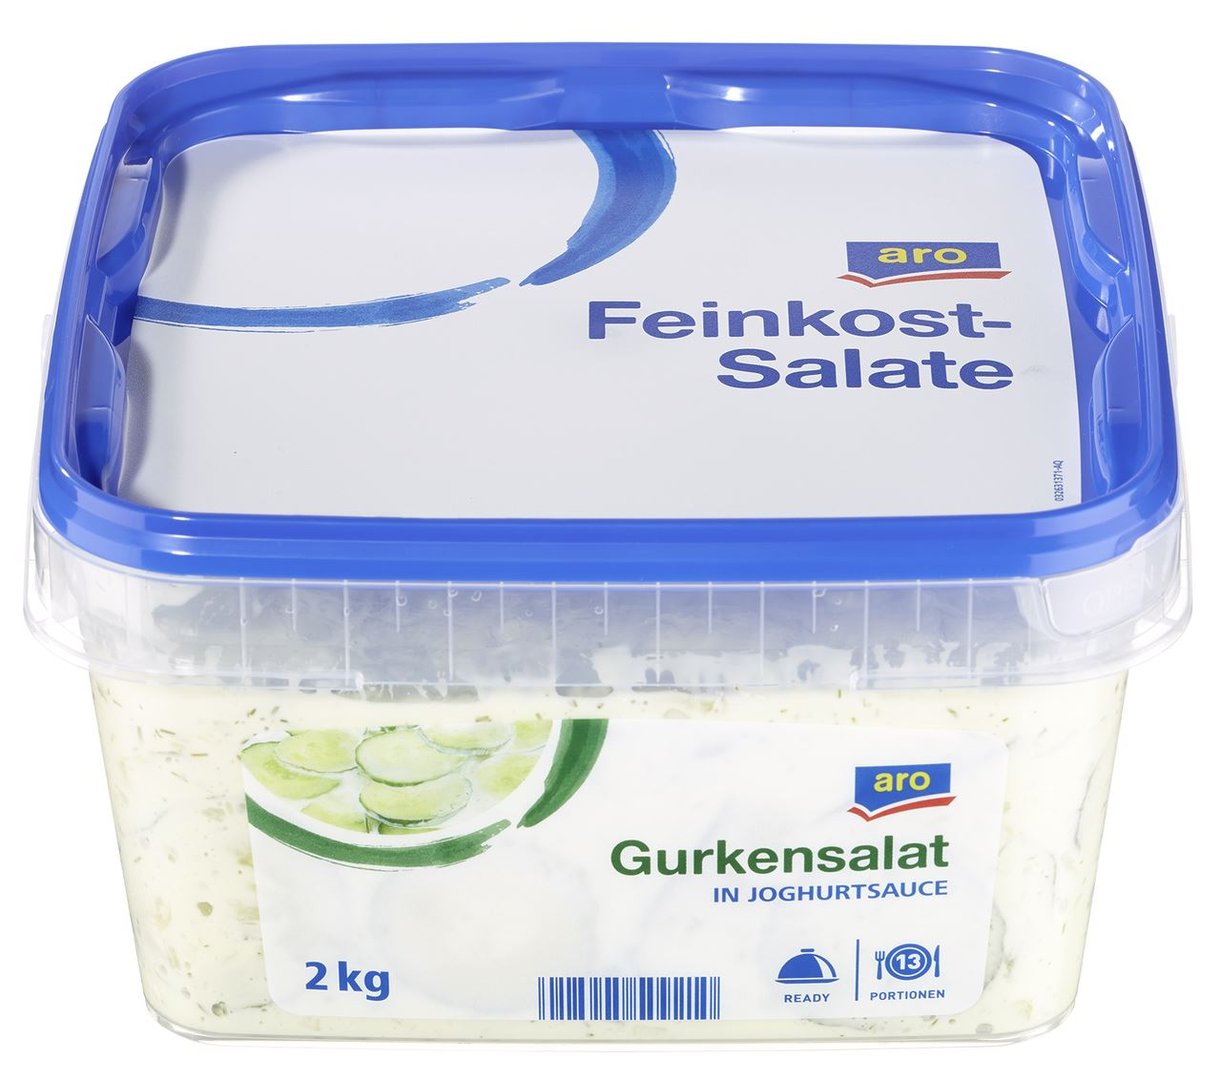 aro - Gurkensalat in Joghurtsauce - 2 kg Eimer